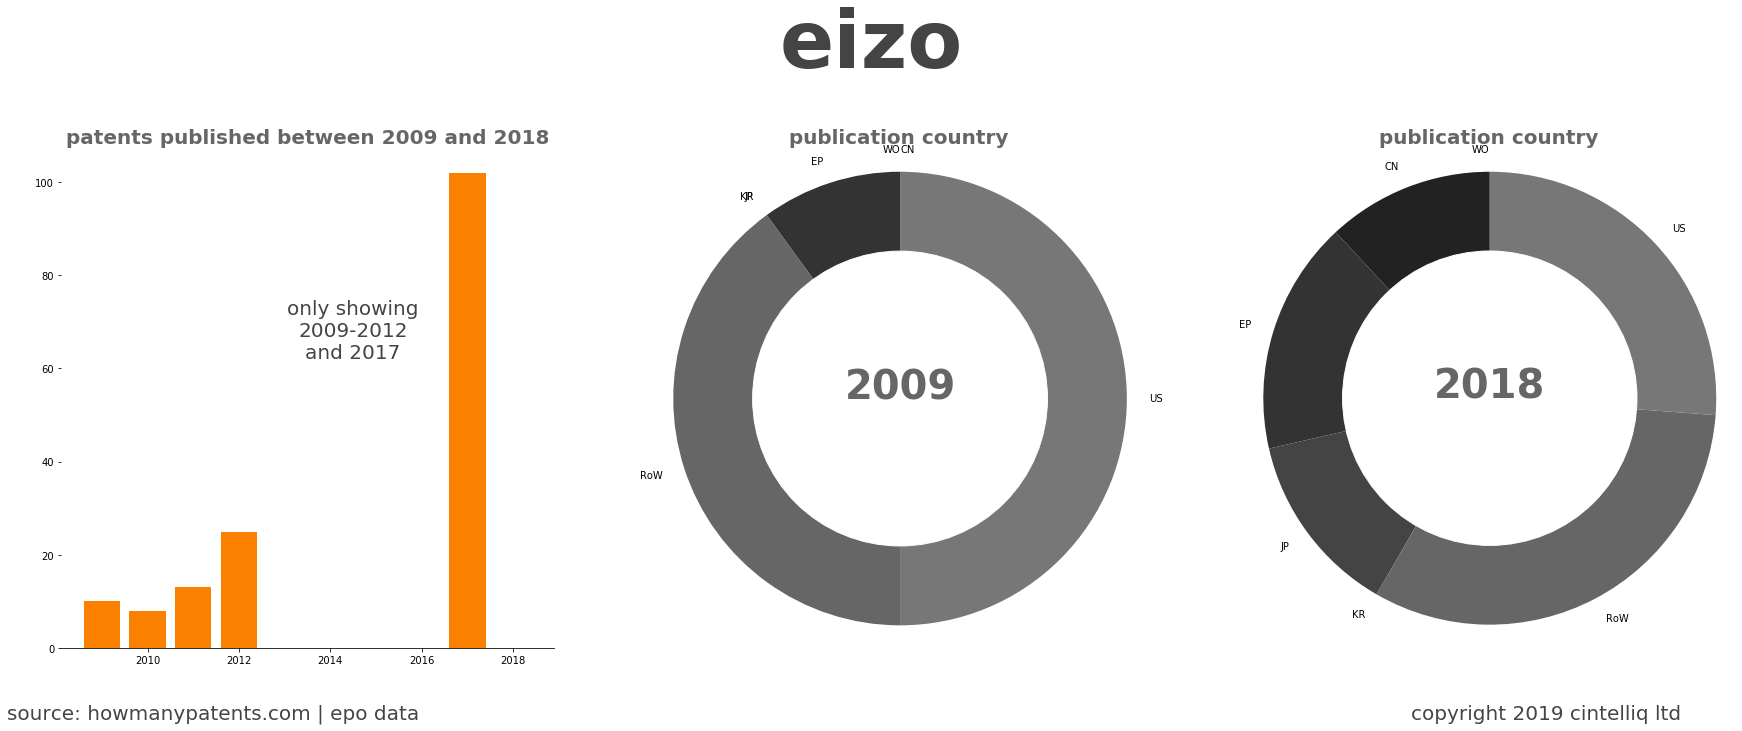 summary of patents for Eizo